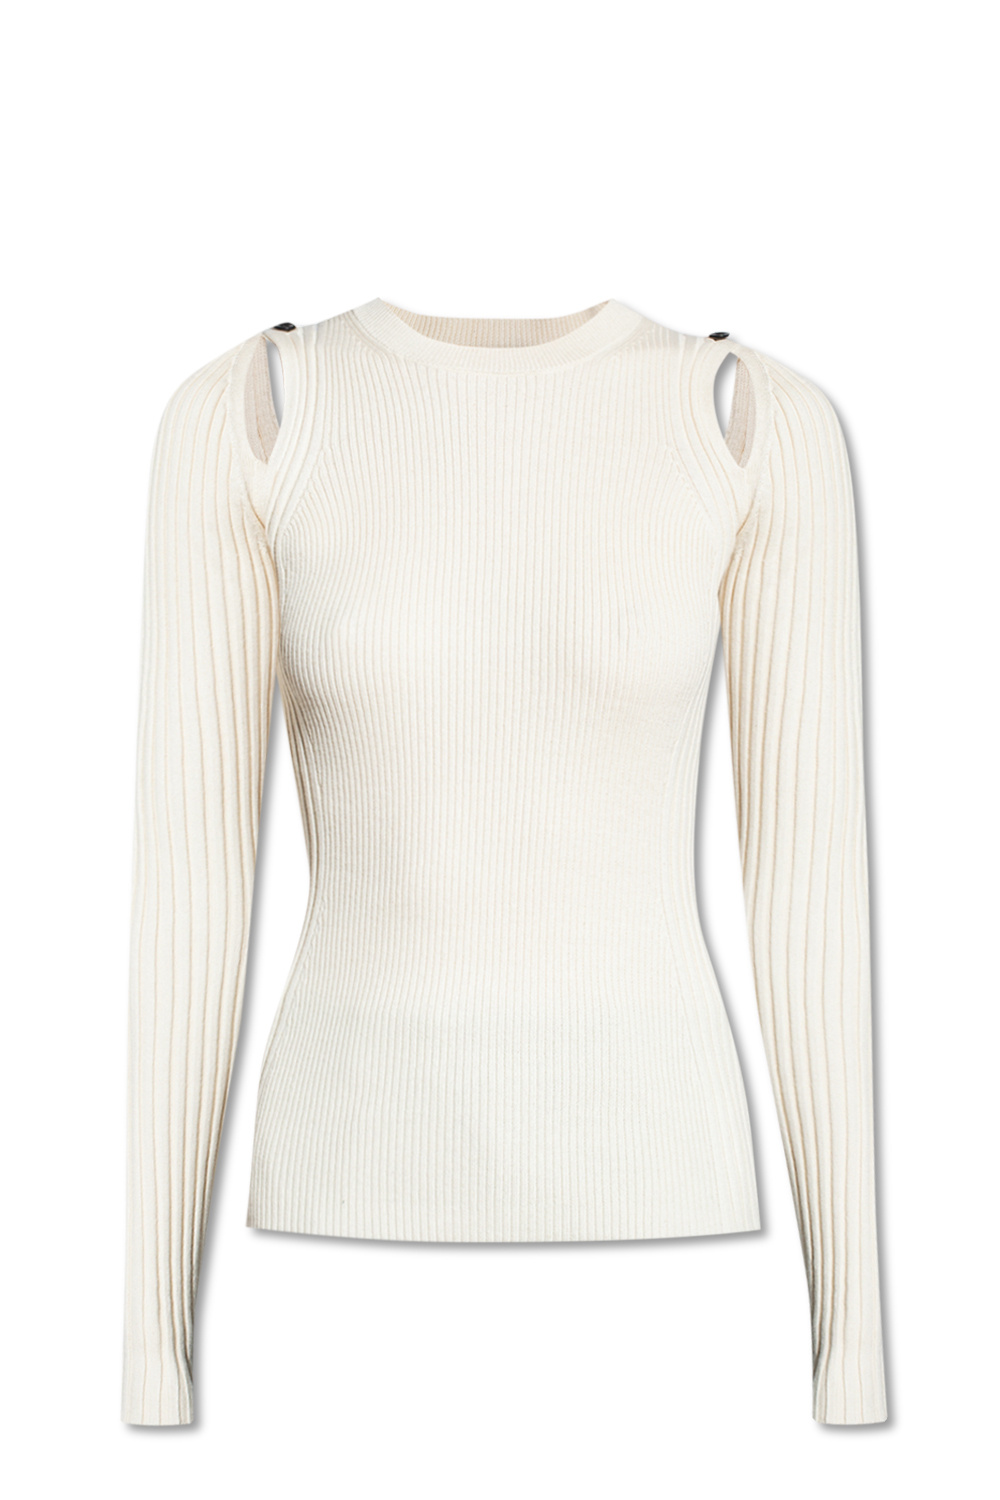 Proenza Schouler White Label Ribbed top | Women's Clothing | Vitkac